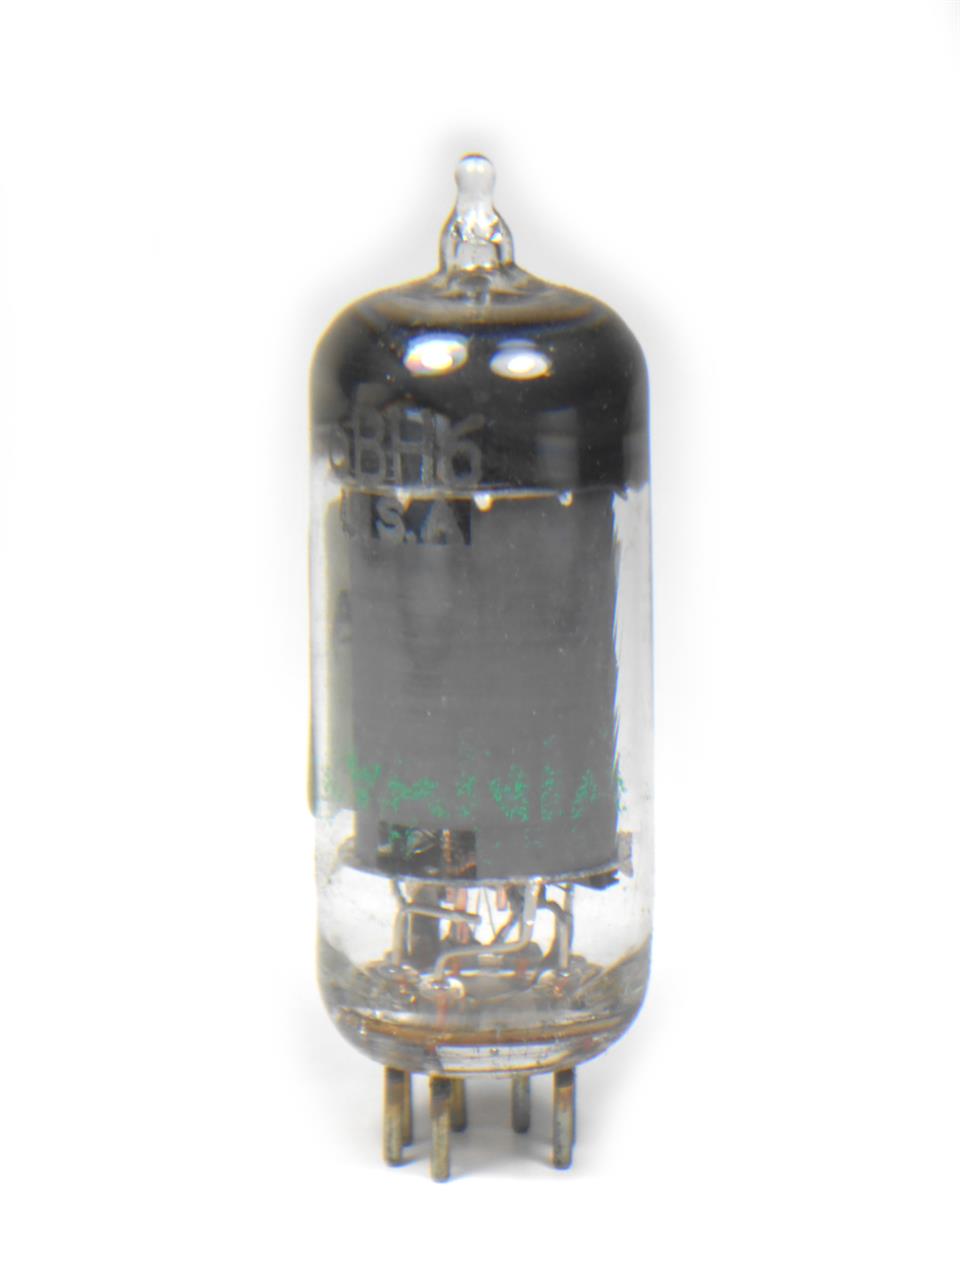 Válvulas eletrônicas pentodo amplificadoras com base subminiatura de sete pinos - Válvula 6BH6 Sylvania